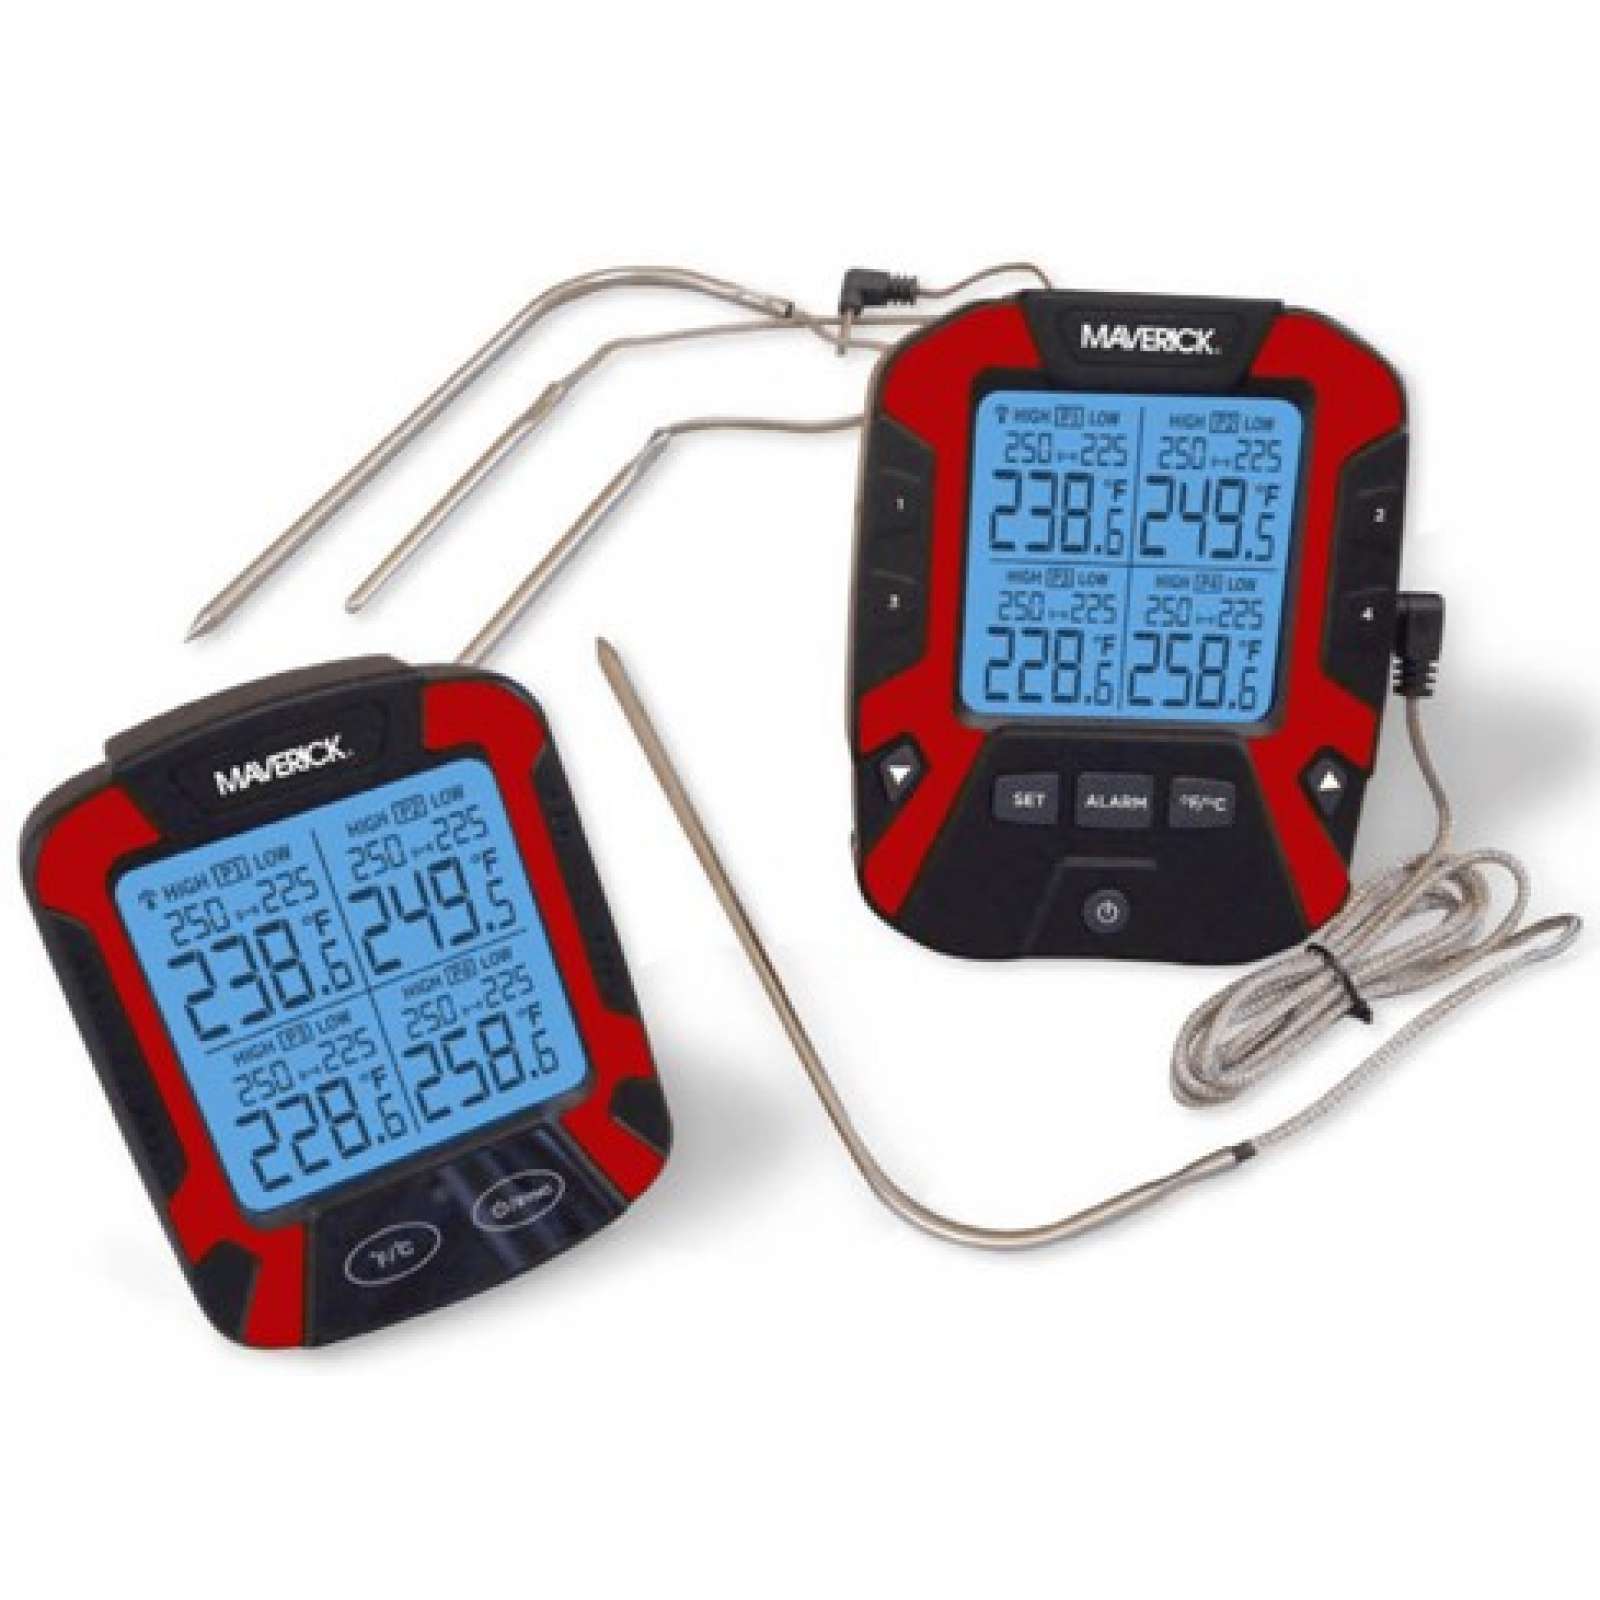 Maverick XR-50 Wireless Remote BBQ & Smoker Thermometer Grillthermometer JS-33639B